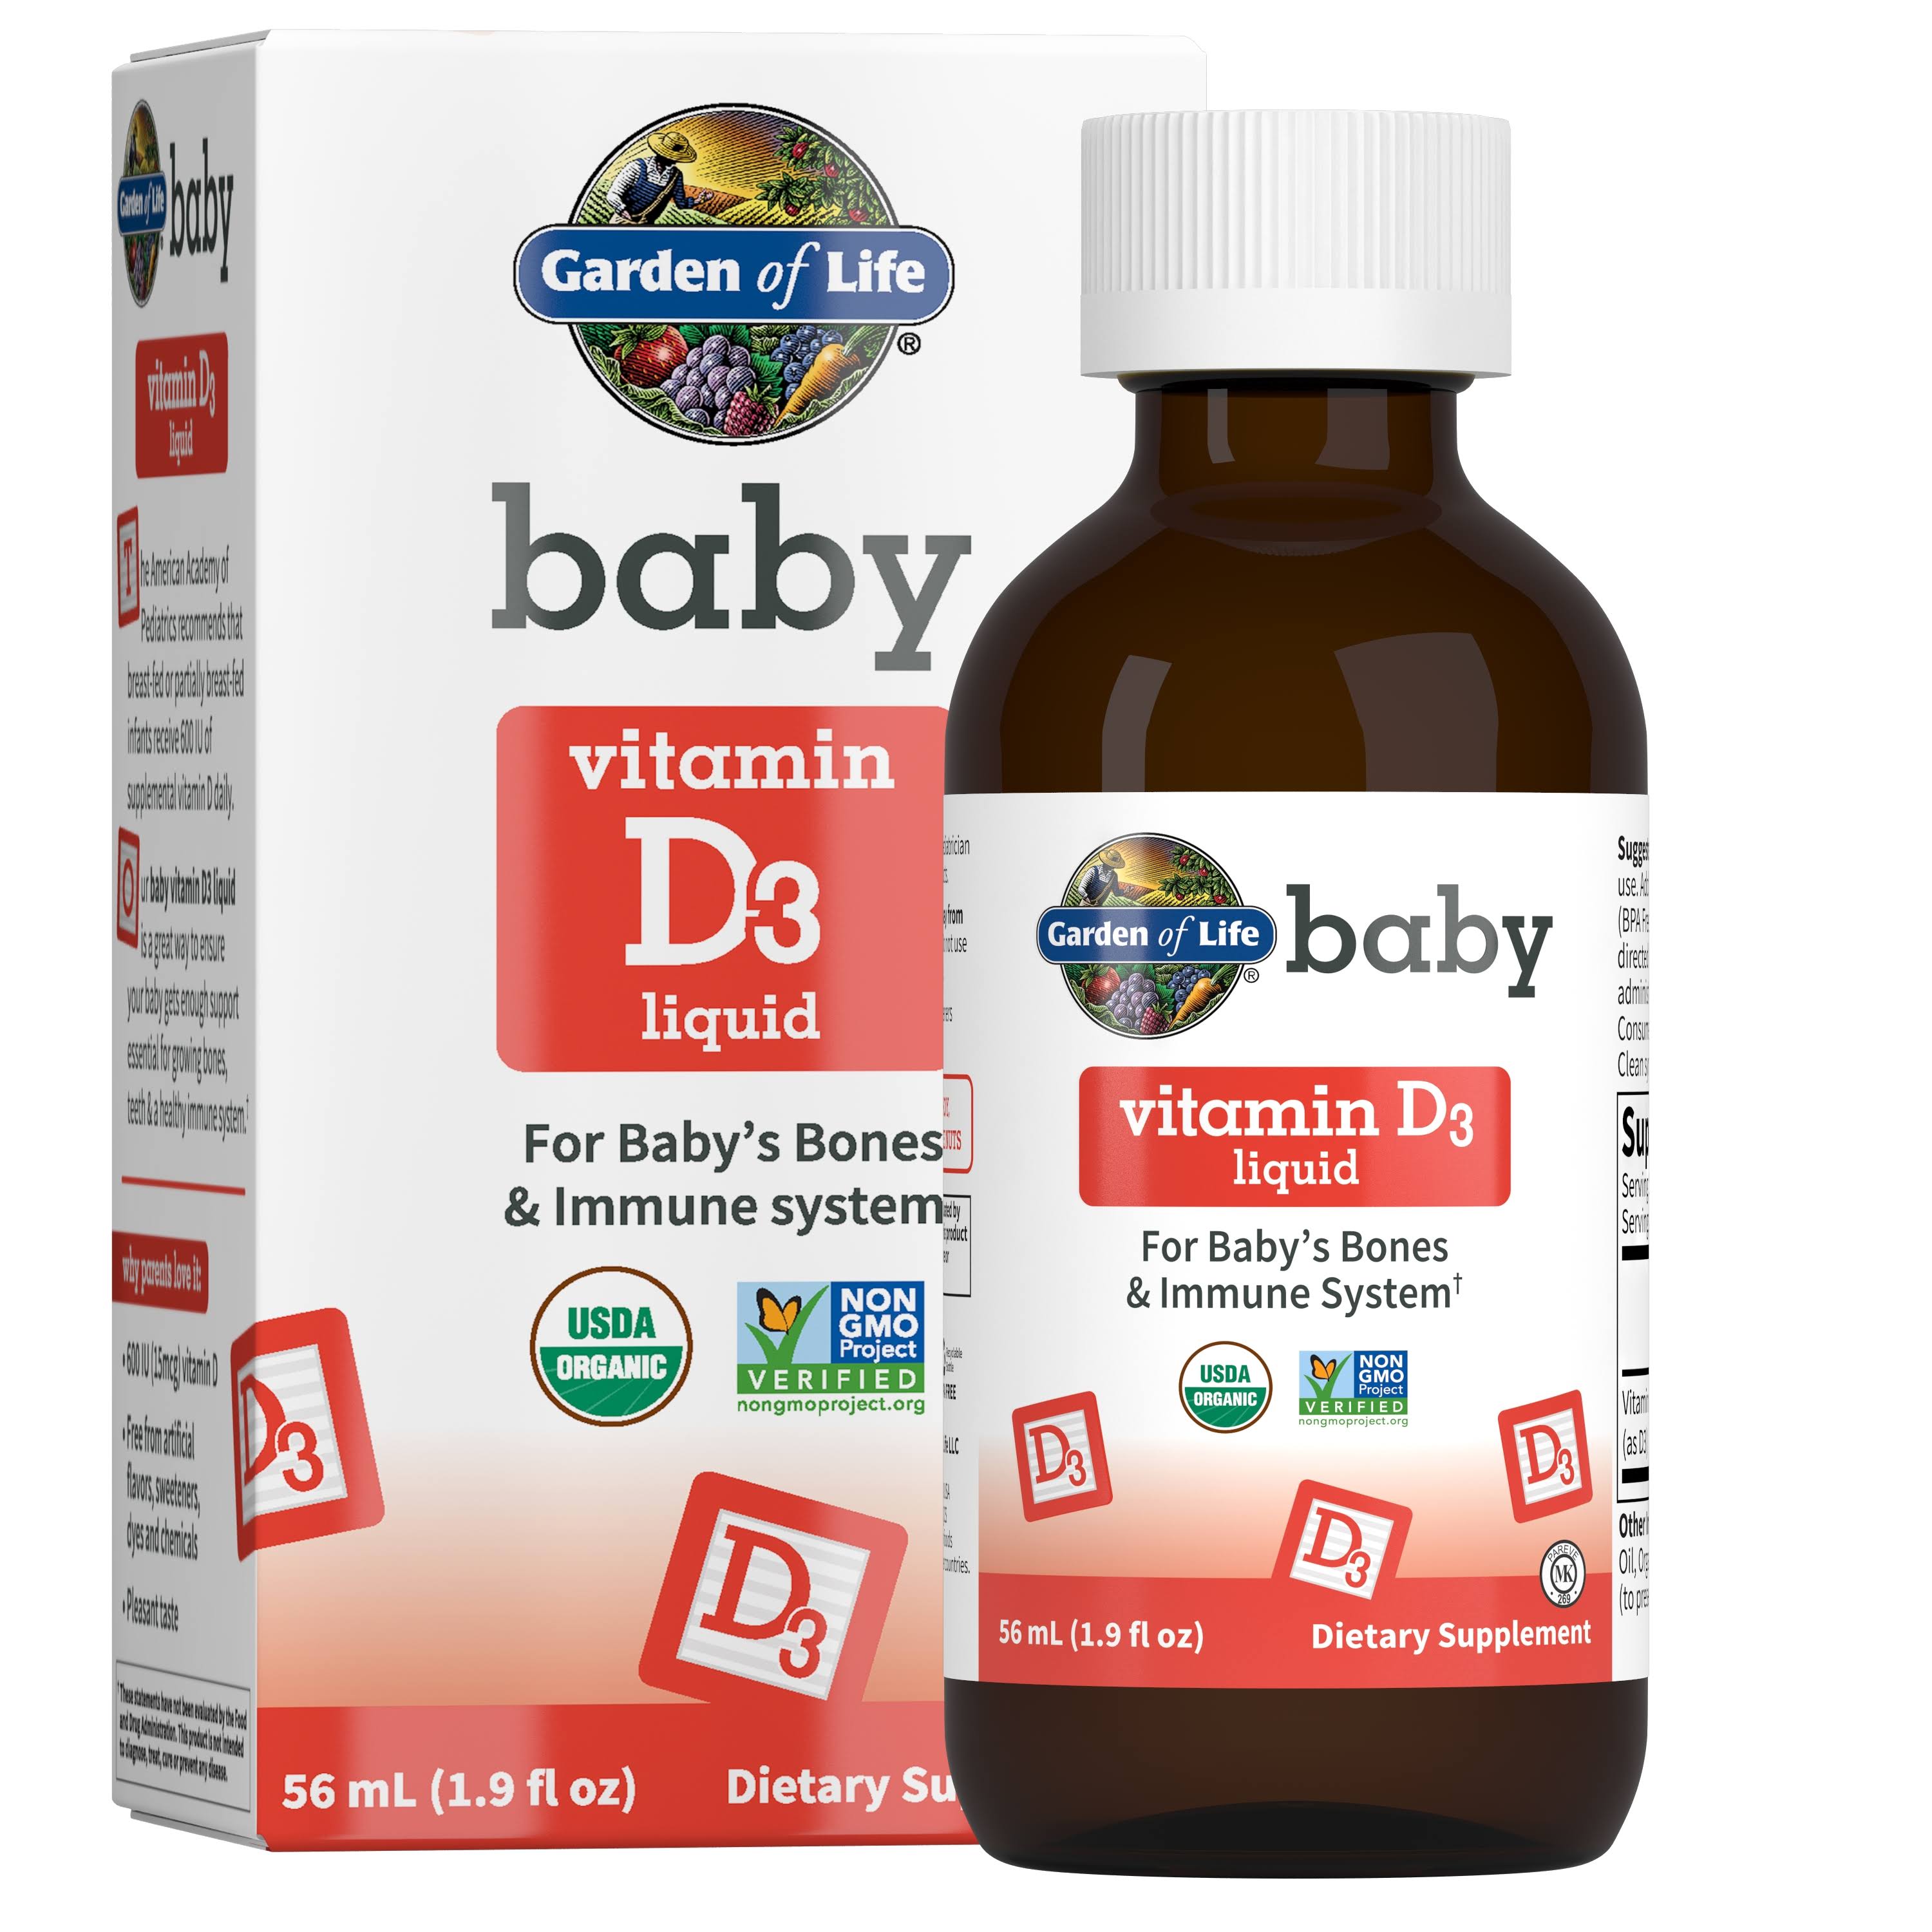 Garden of Life Baby Vitamin D3 Liquid, 1.9 Fl Oz